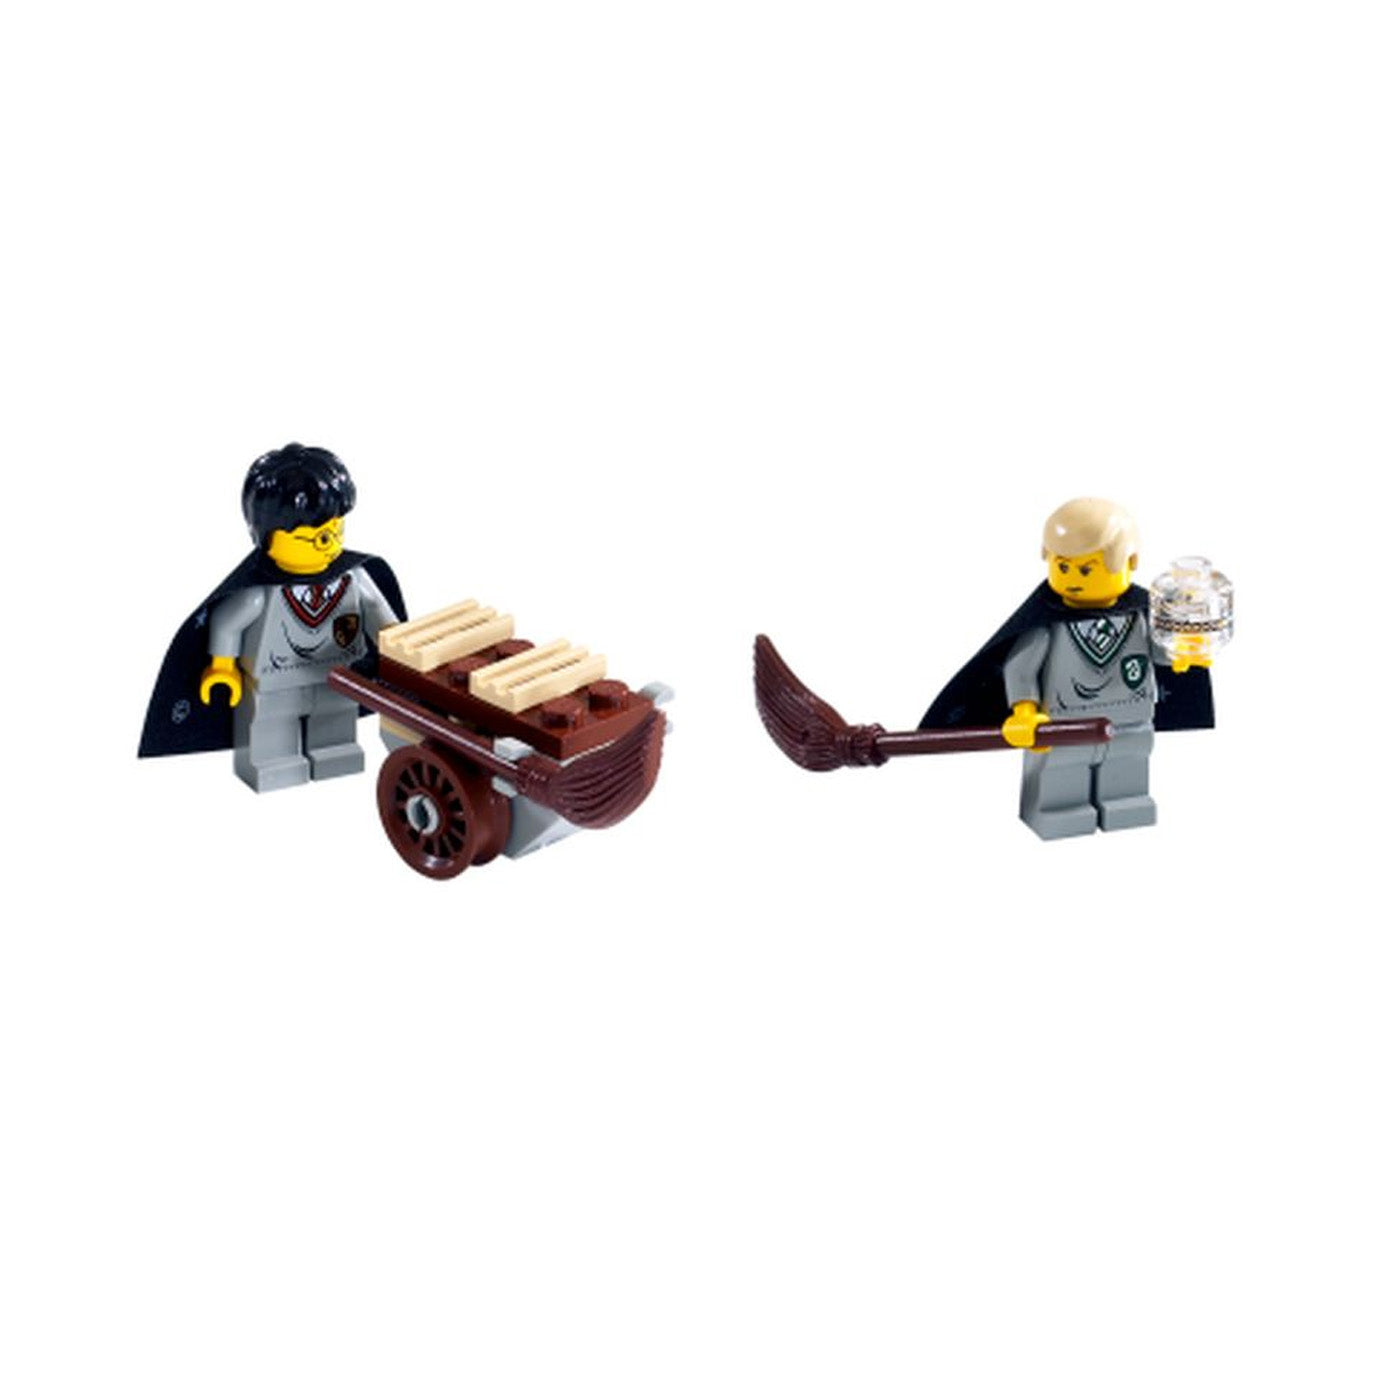 LEGO Harry Potter: Flying Lesson Set 4711